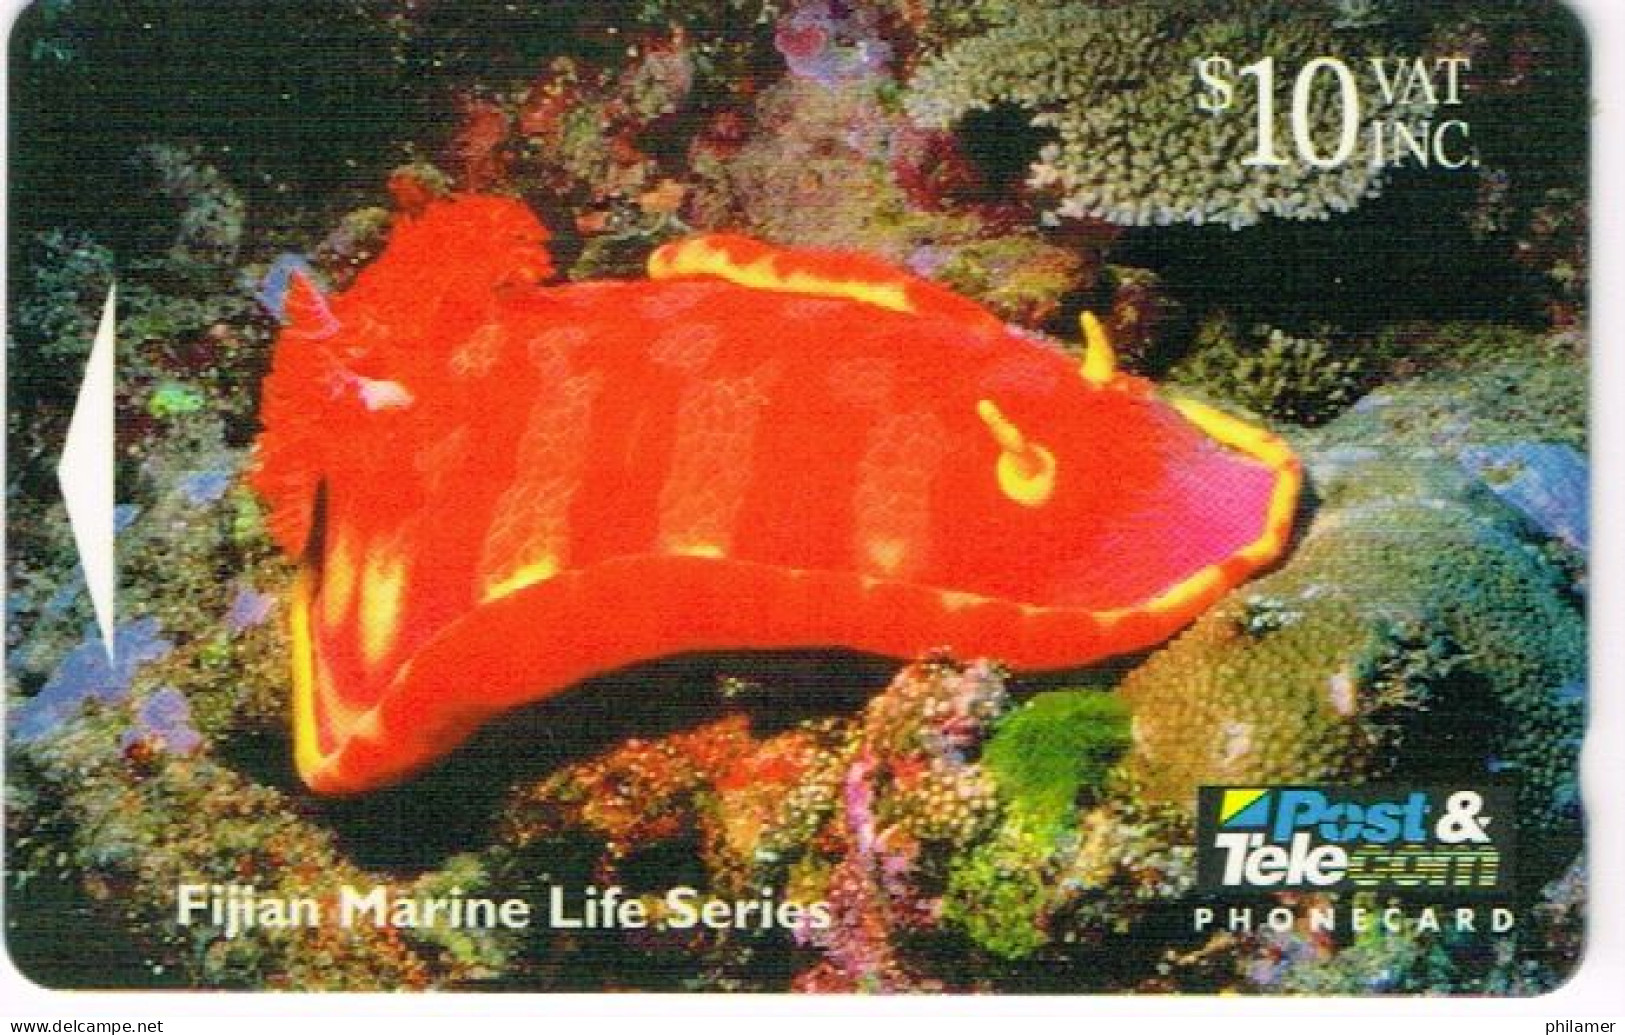 Fidji Fiji TELECARTE PHONECARD Telecom Marine Serie Sea Slug Limace Mer Nudibranch Recif Reef 1995 2 Dollars Ut BE - Fidschi